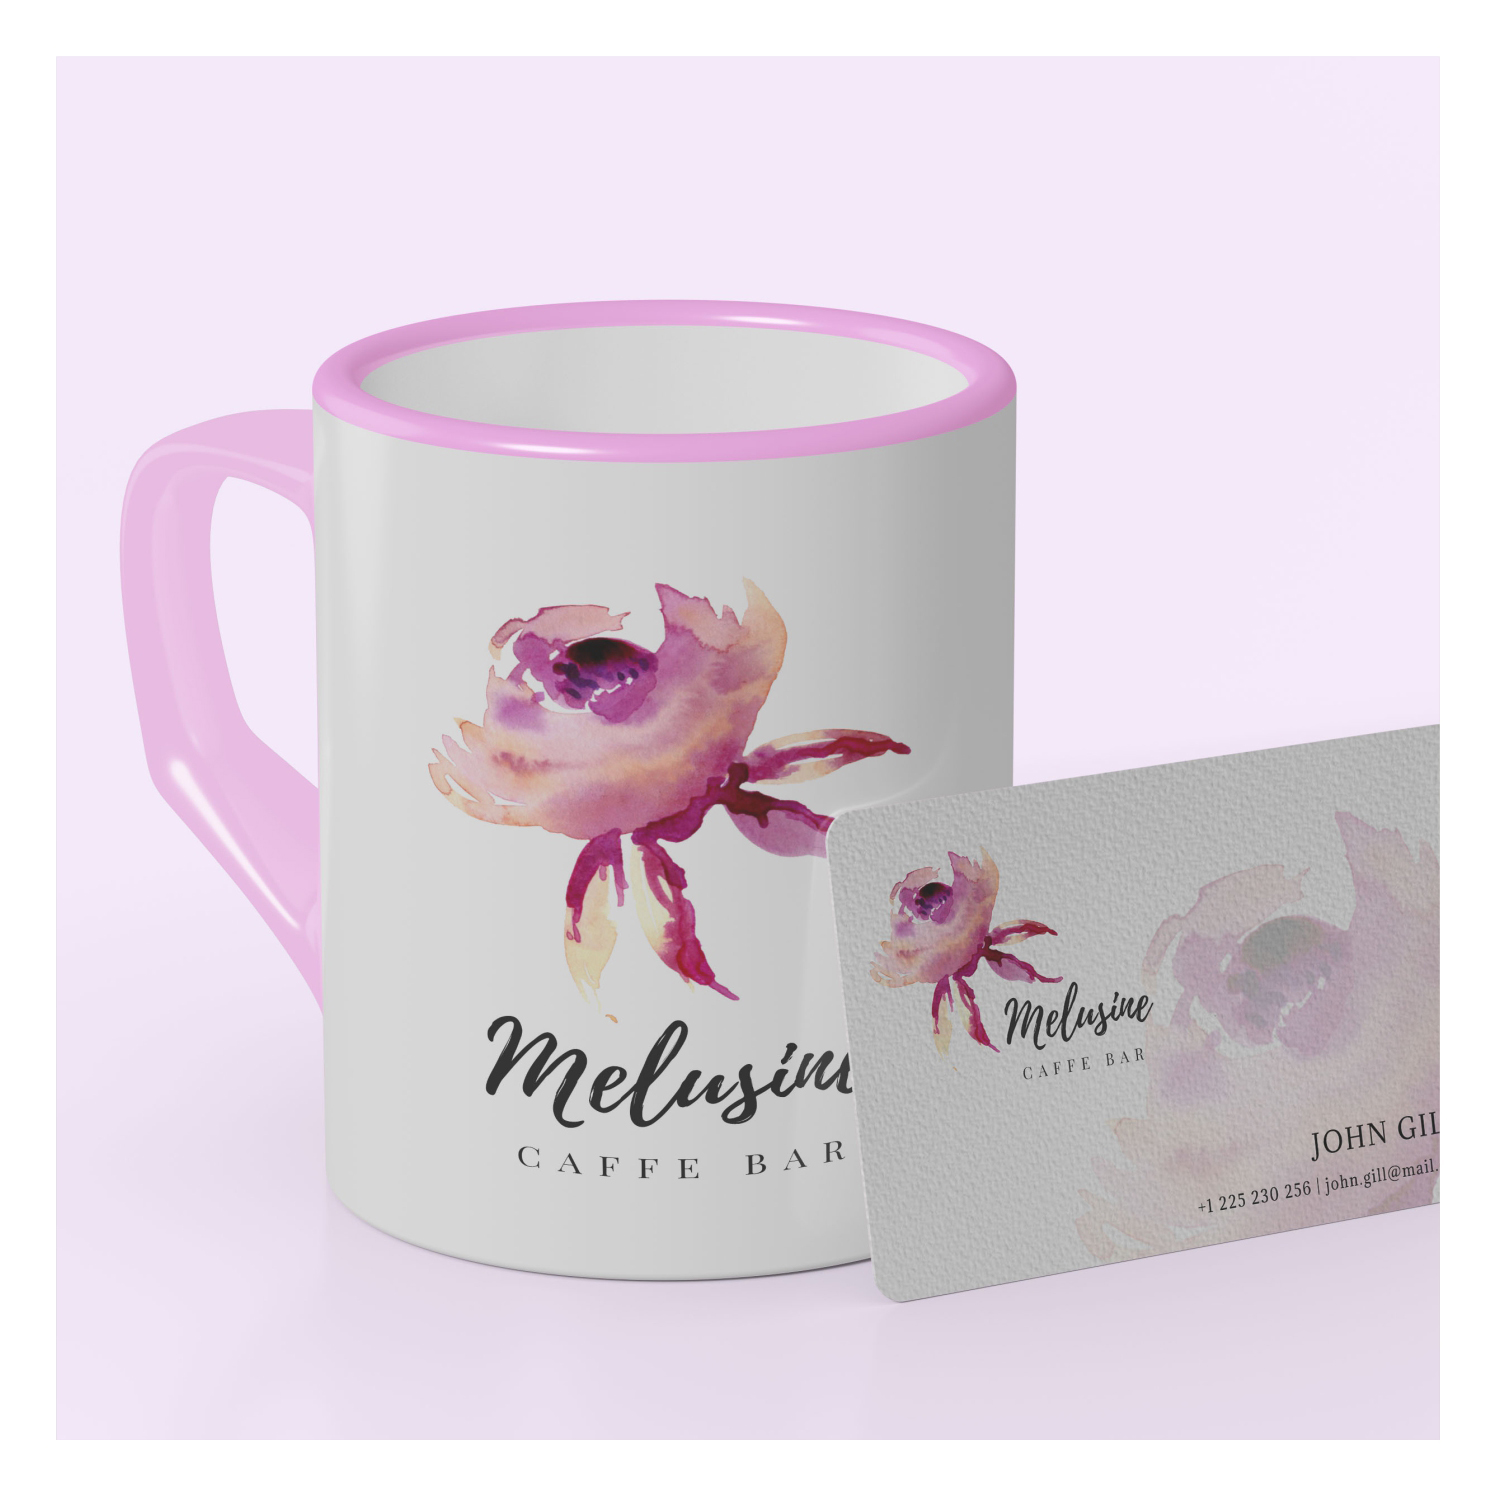 Melusine-Caffee-Bar-Branding-Business-Card-Designs-webvizion-global